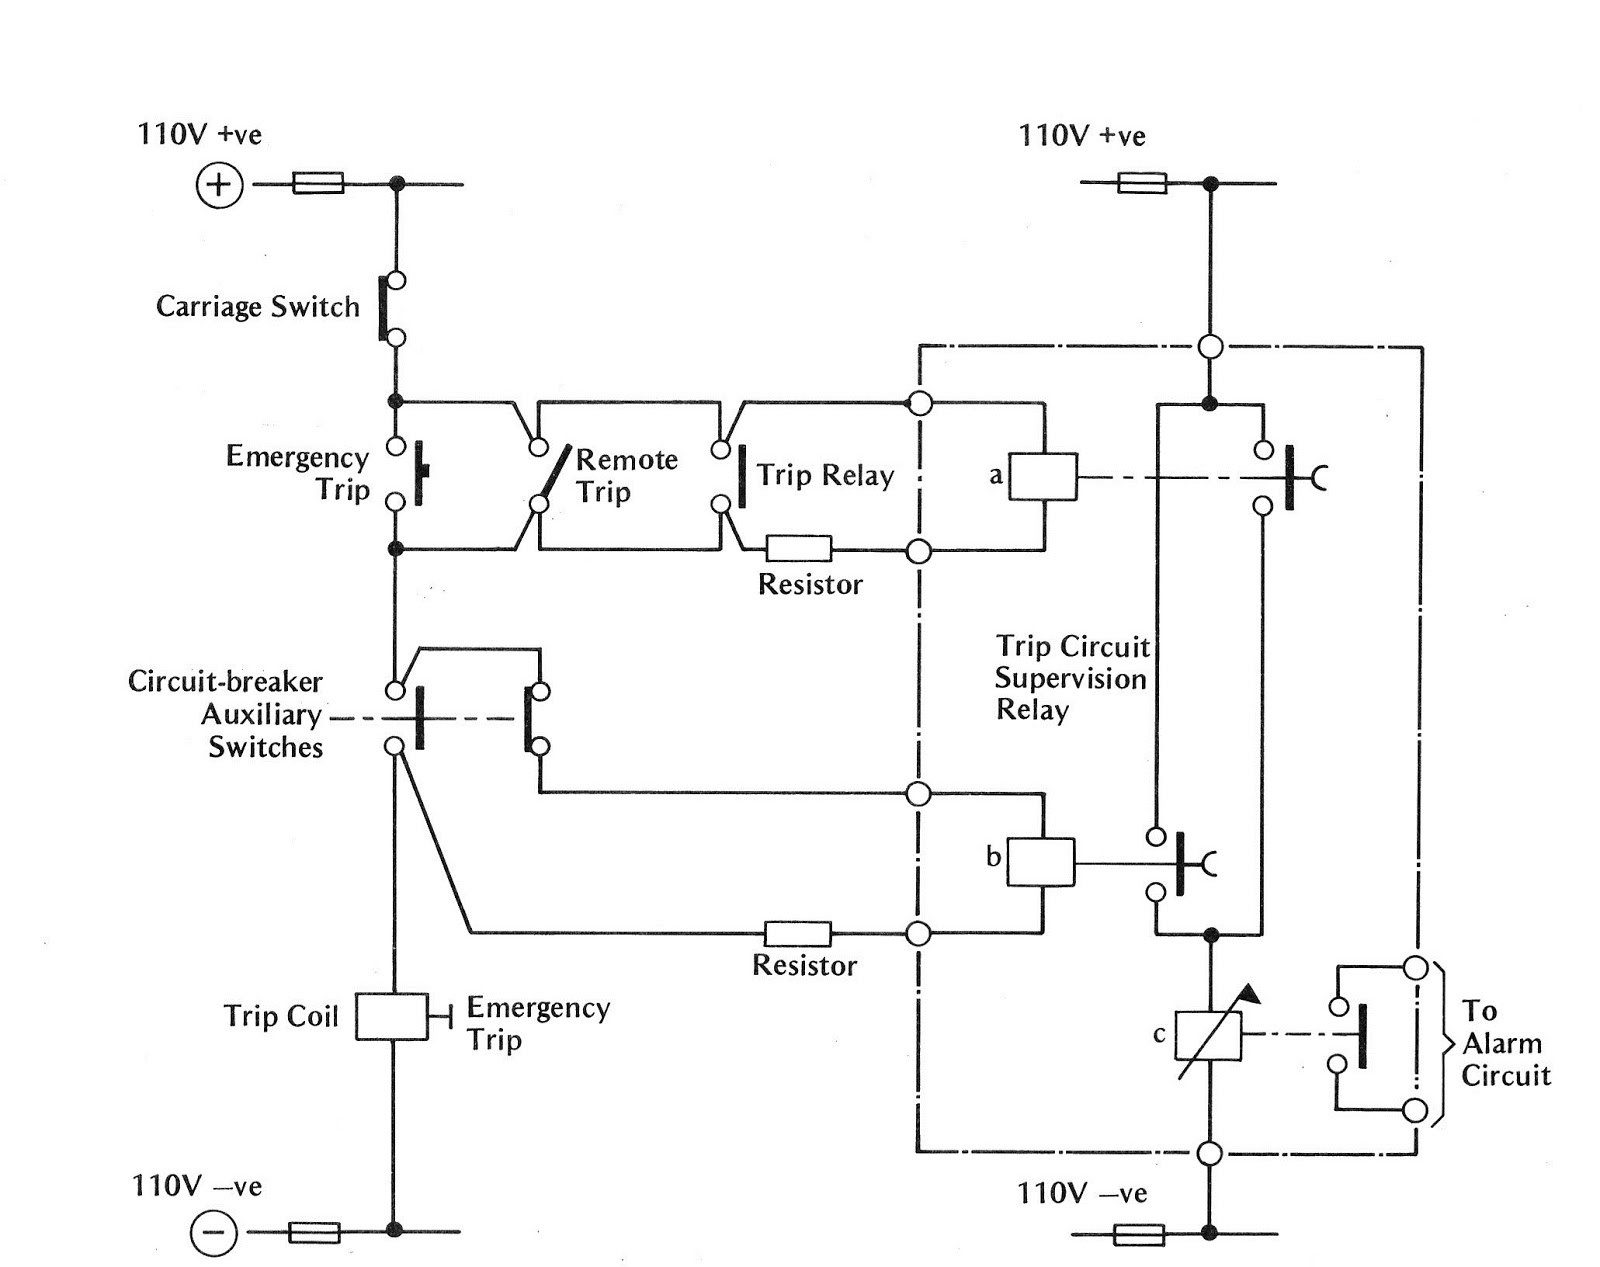 2 Wire thermostat Wiring Diagram Elegant Siemens Shunt Trip Breaker Wiring Diagram 61 with Additional Of 2 Wire thermostat Wiring Diagram